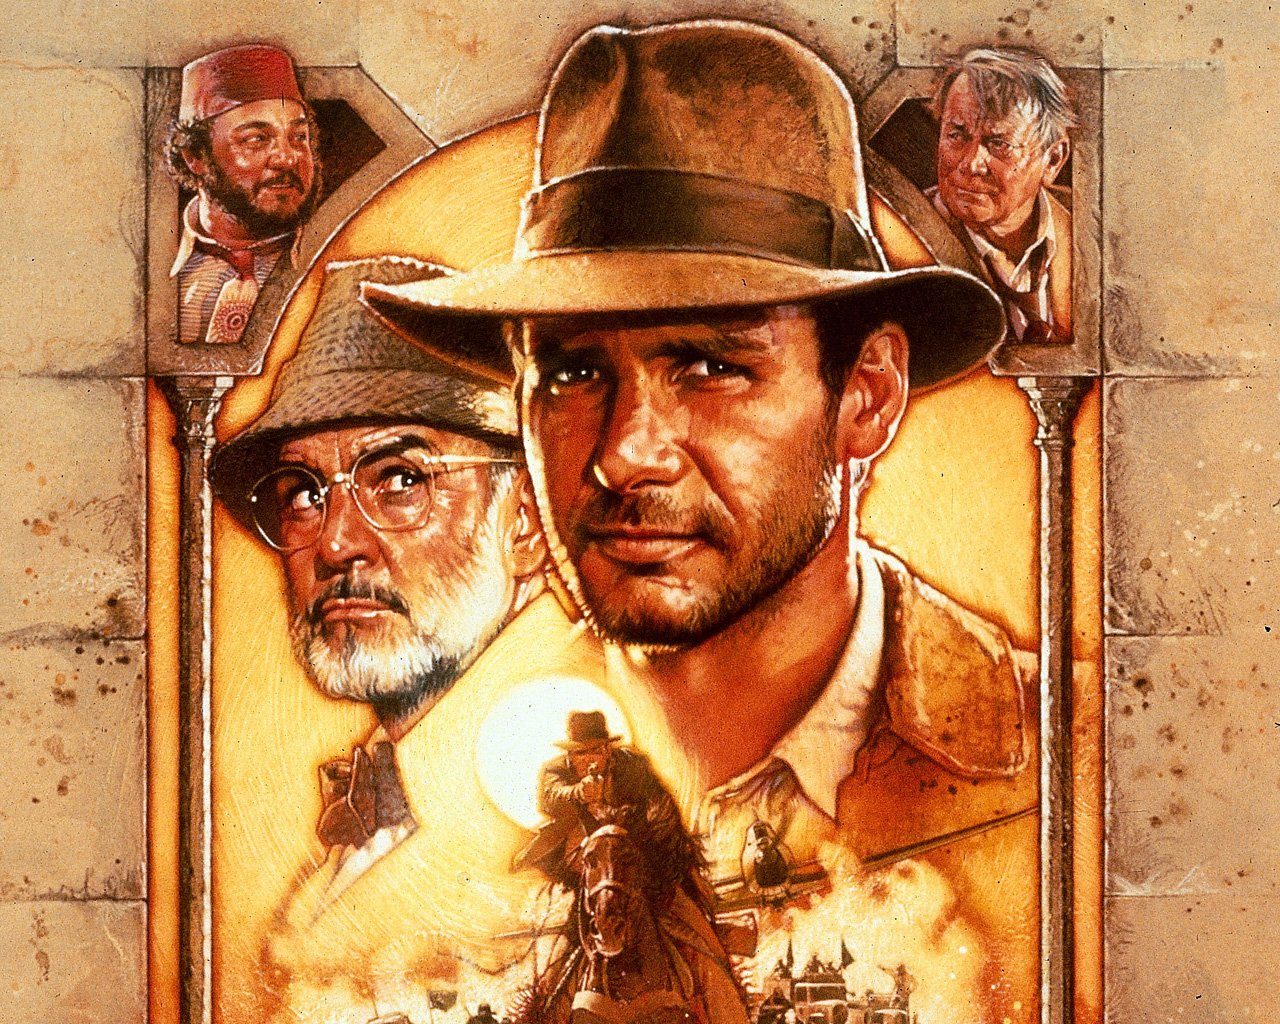 Indiana Jones post (analysis of one trap). - 1989, Indiana Jones, Spoiler, Trap, George Lucas, Steven Spielberg, Harrison Ford, GIF, Longpost